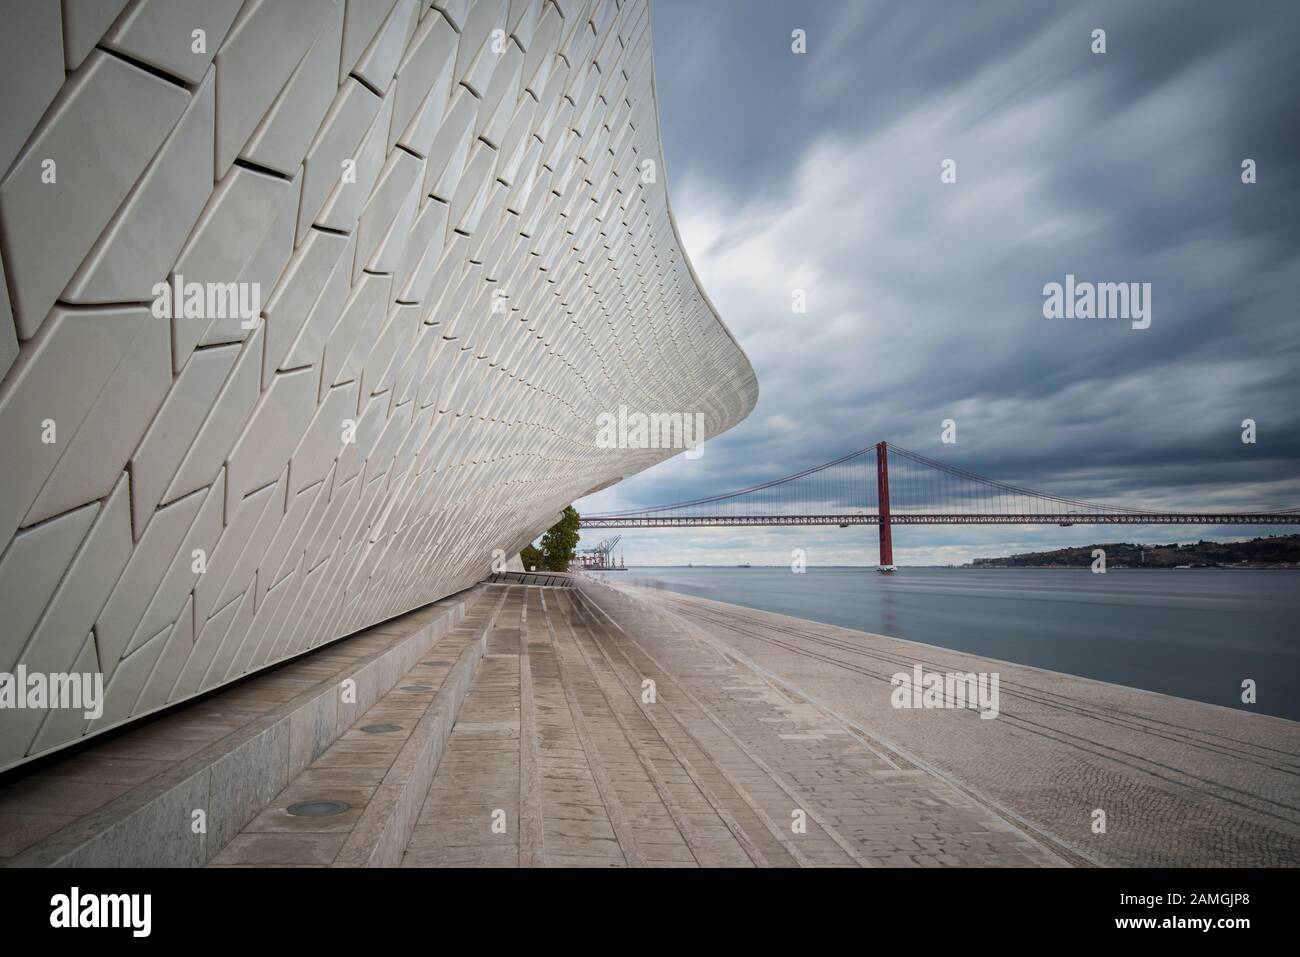 The modern  MAAT (Museu de Arte, Arquitetura e Tecnologia) building with futuristic architecture in Lisbon, Portugal Stock Photo